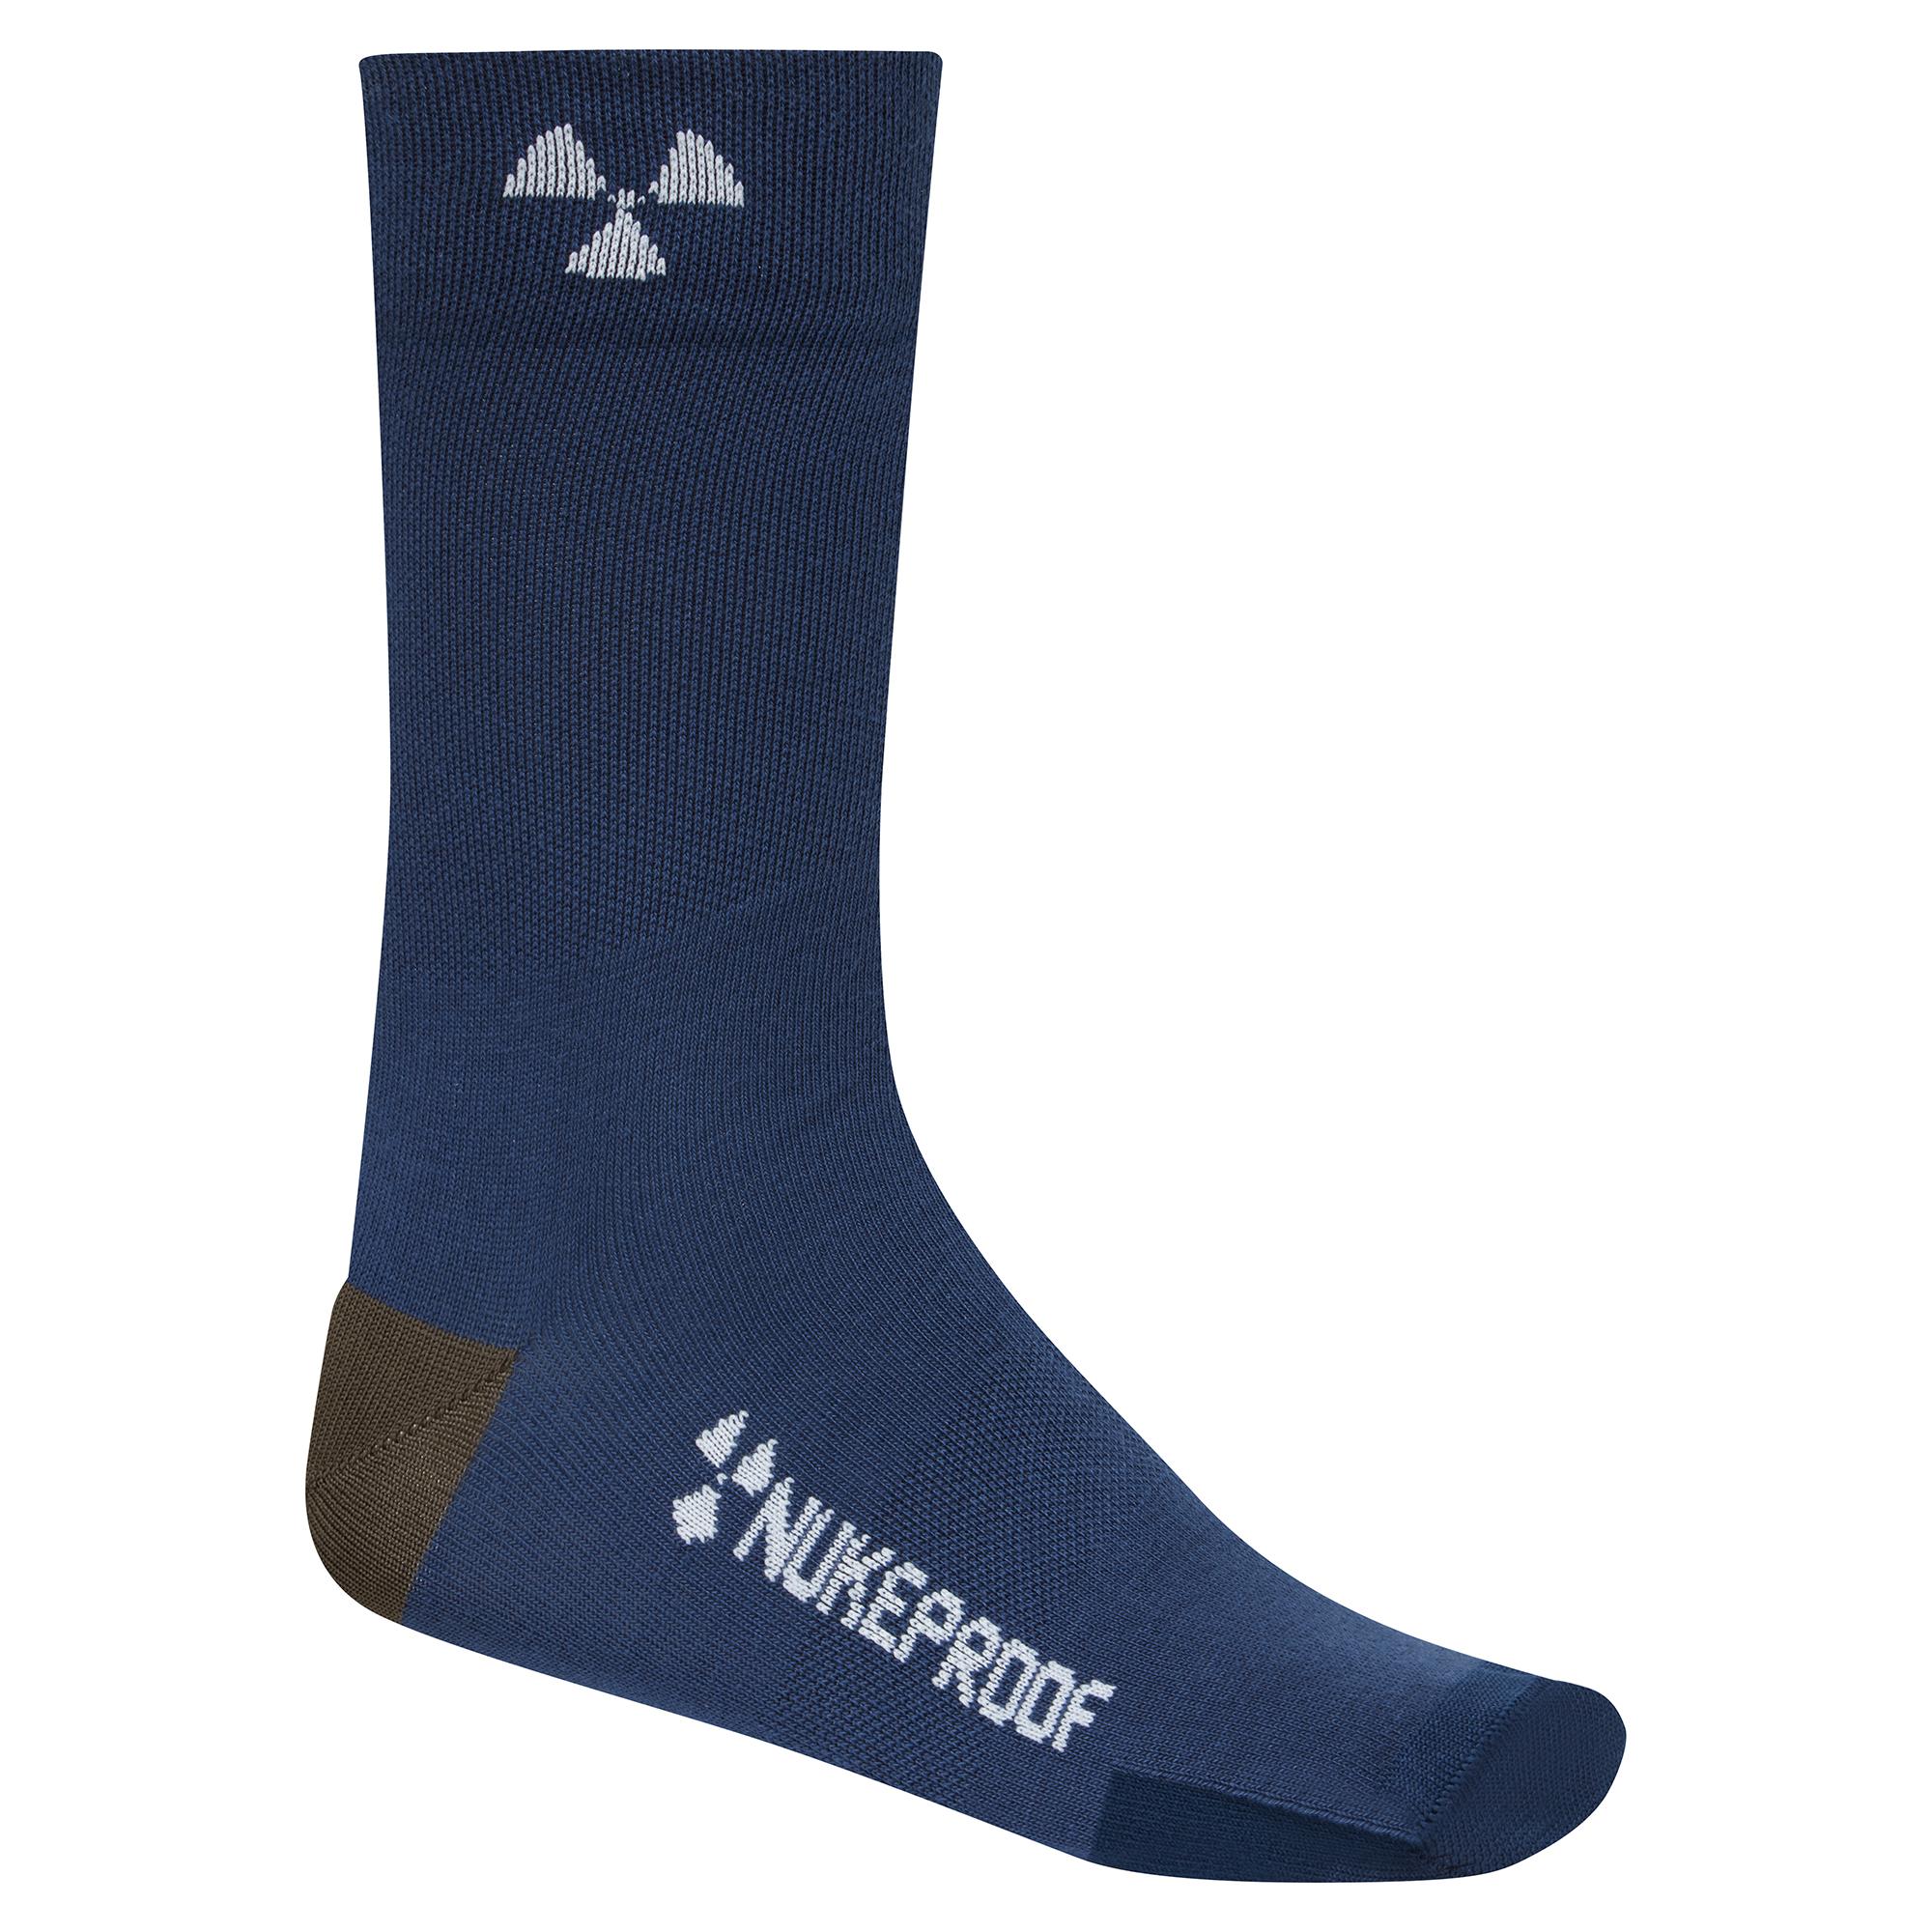 Nukeproof Outland Sock - Blue